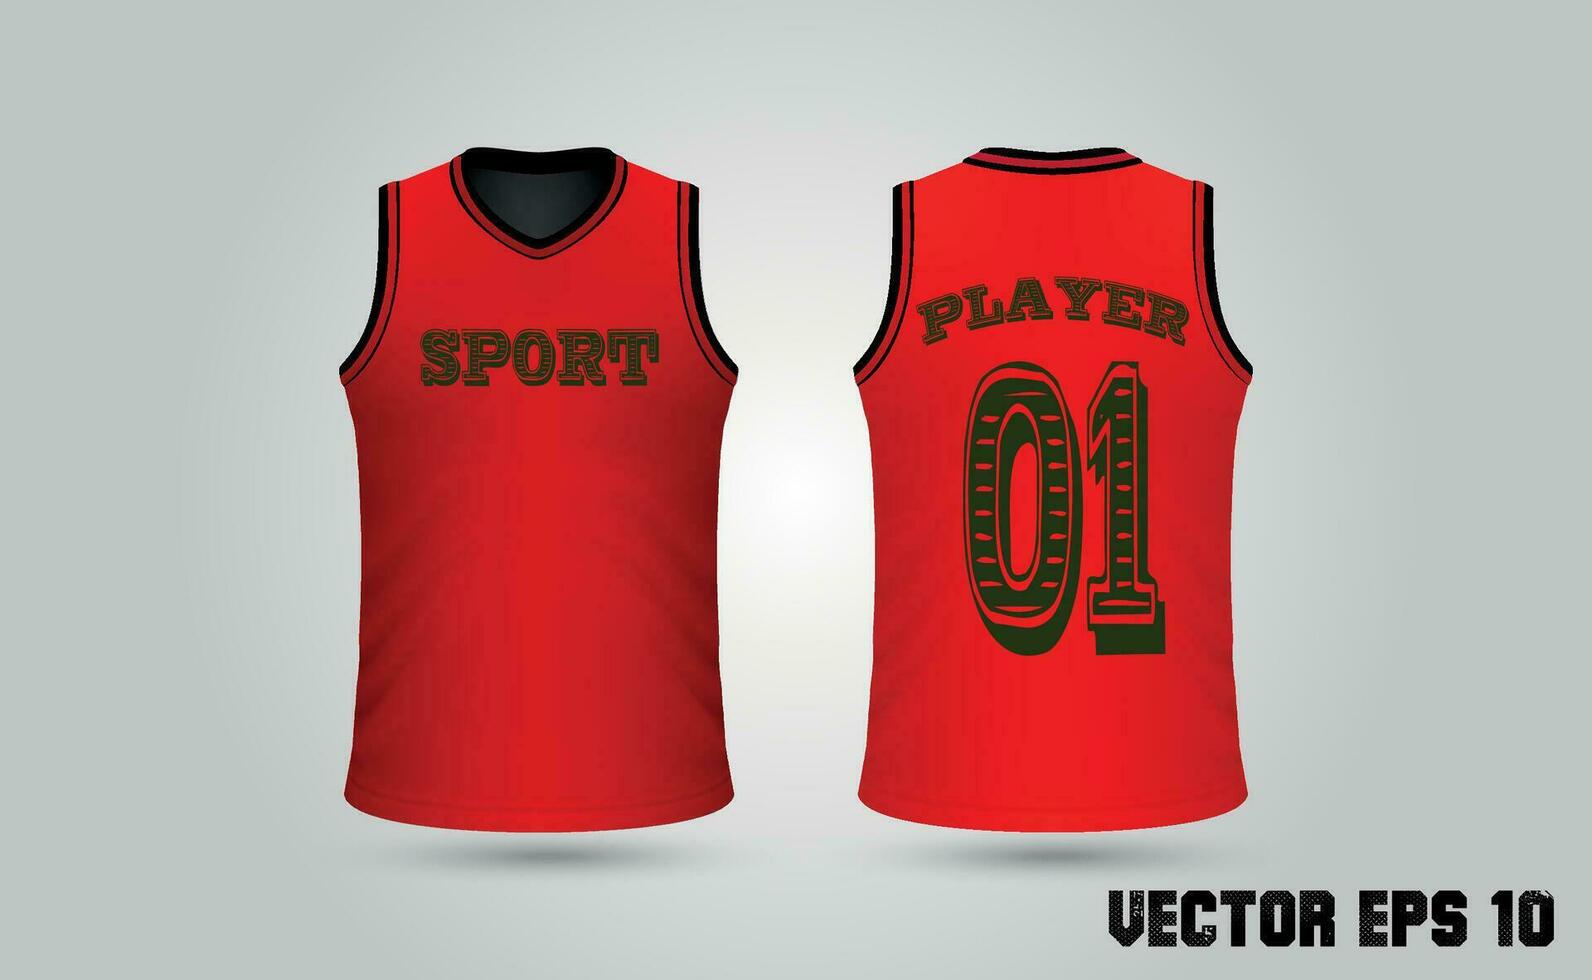 vector llanura baloncesto uniforme camiseta